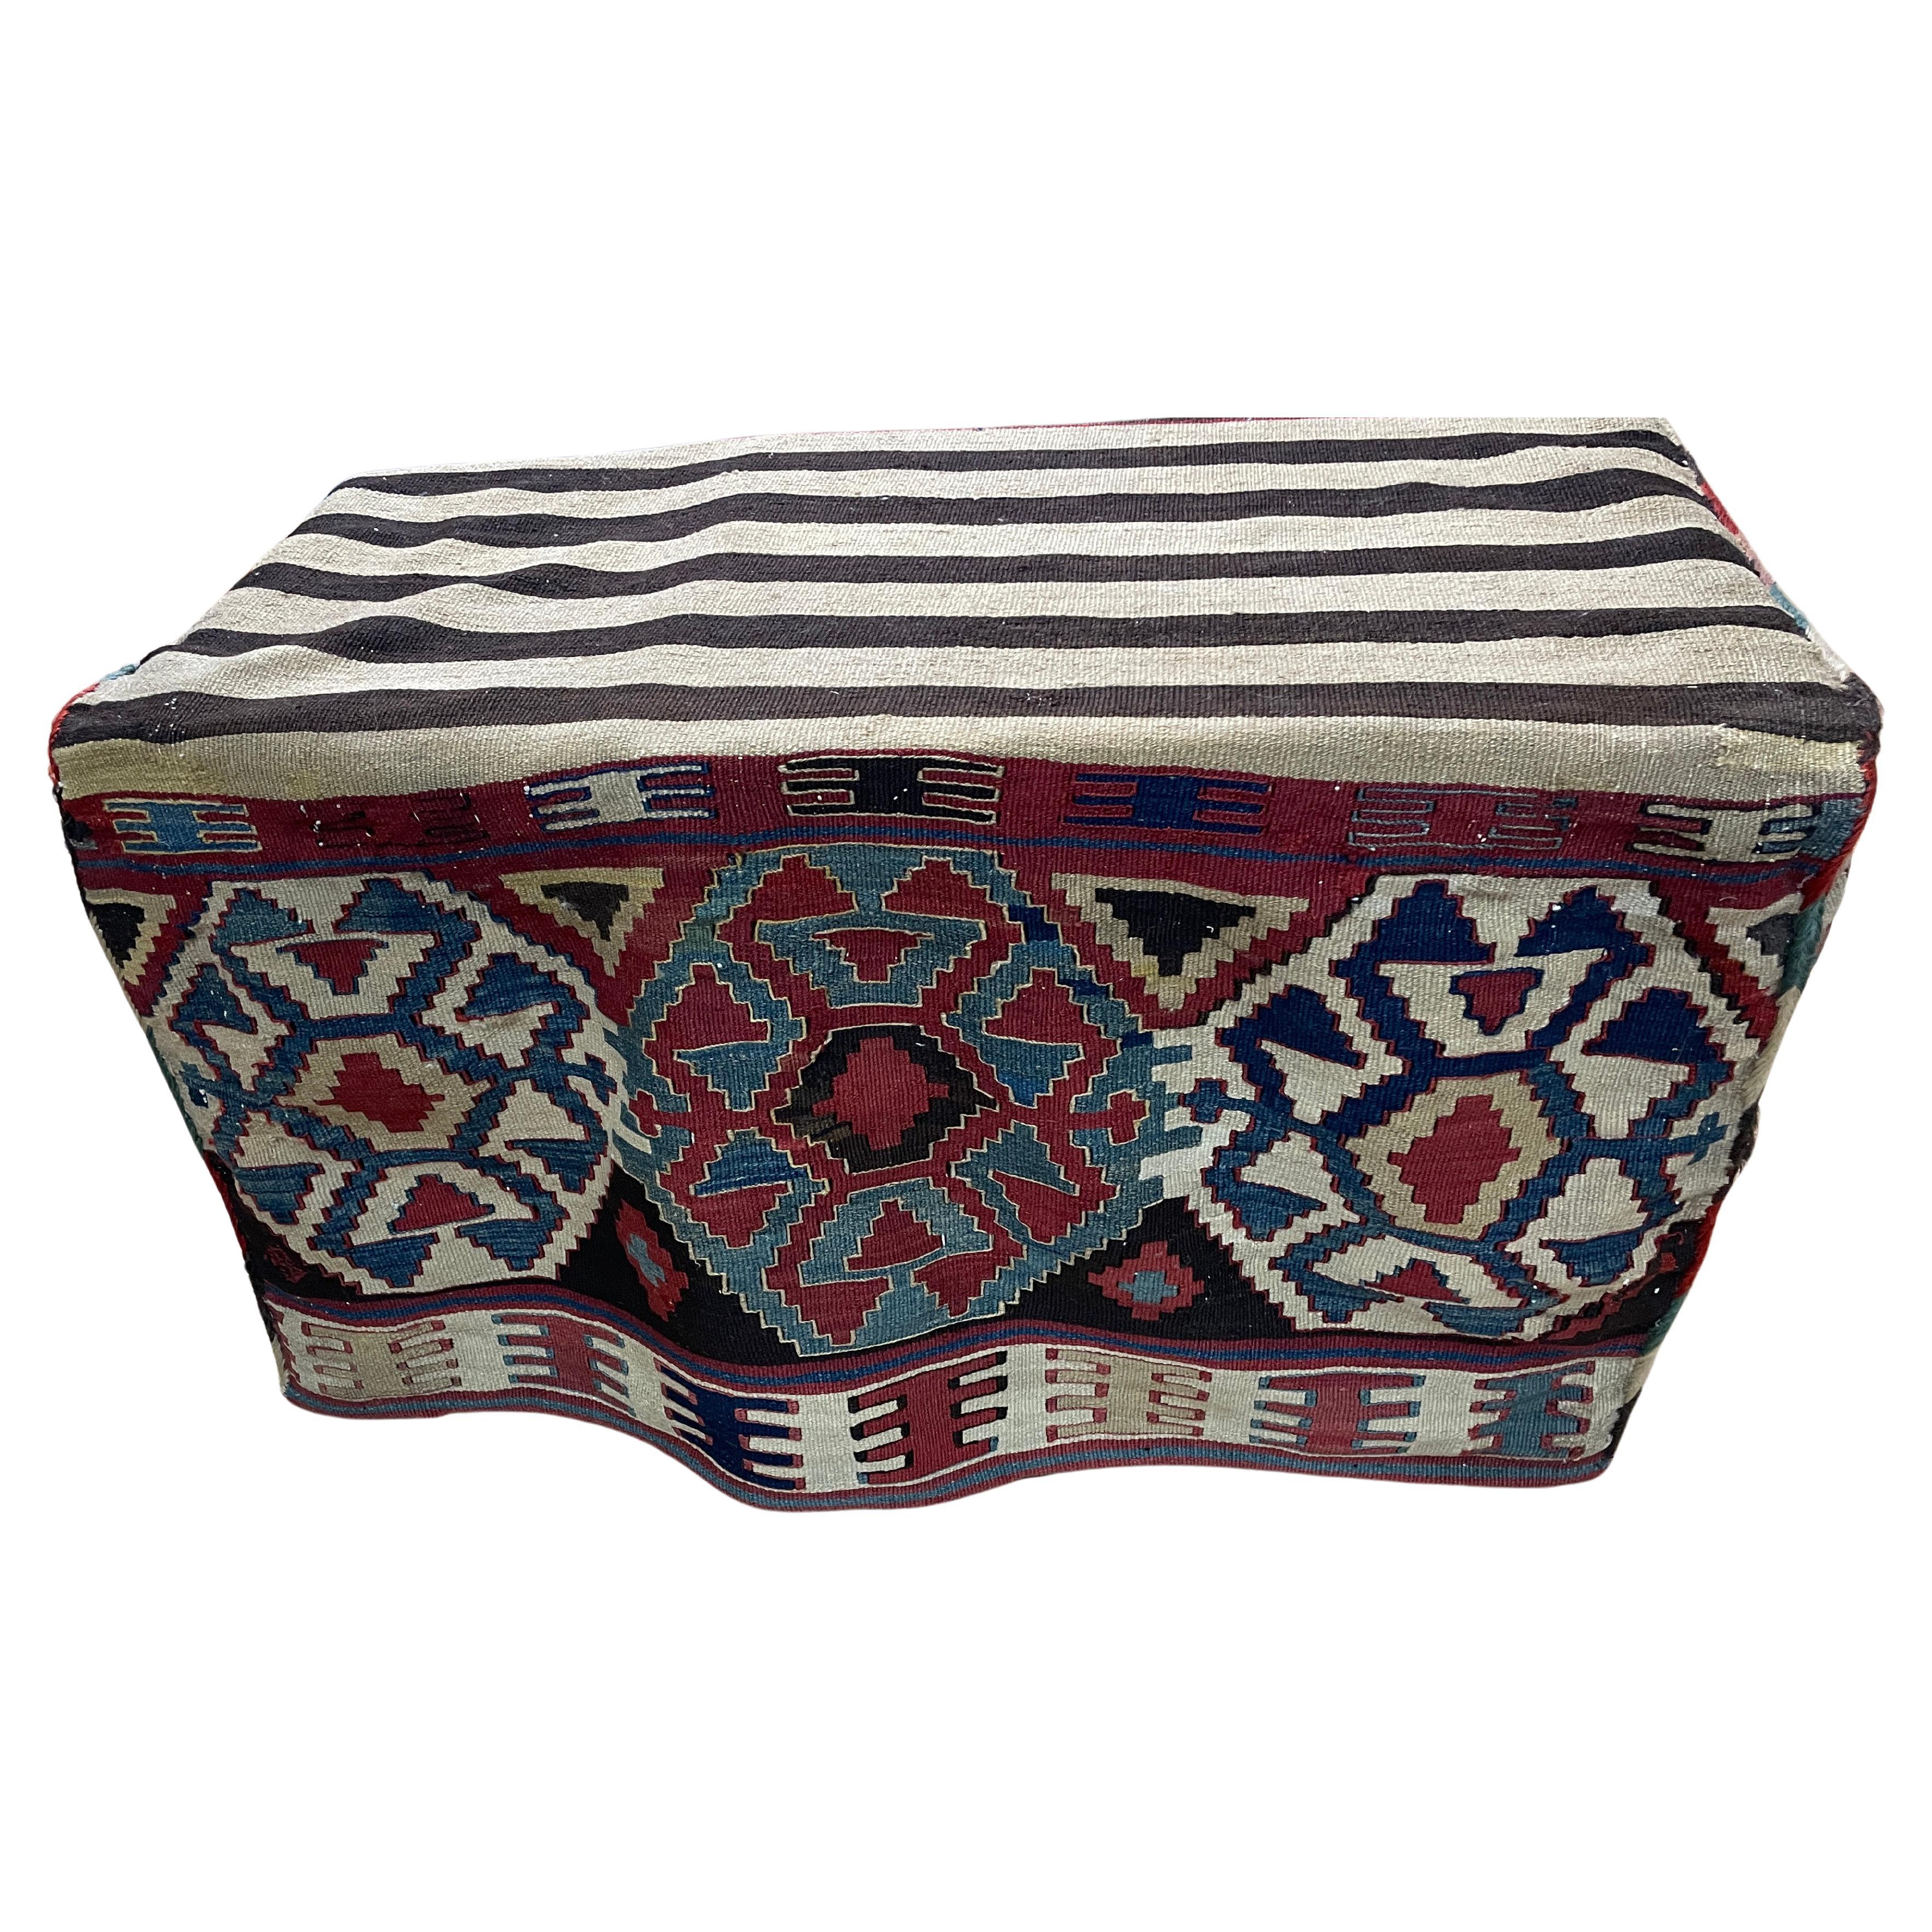 Antique Azerbaijan/ Shahsavan Cargo Bag or Mafrash, Bedding Bags, Soumak Kilim